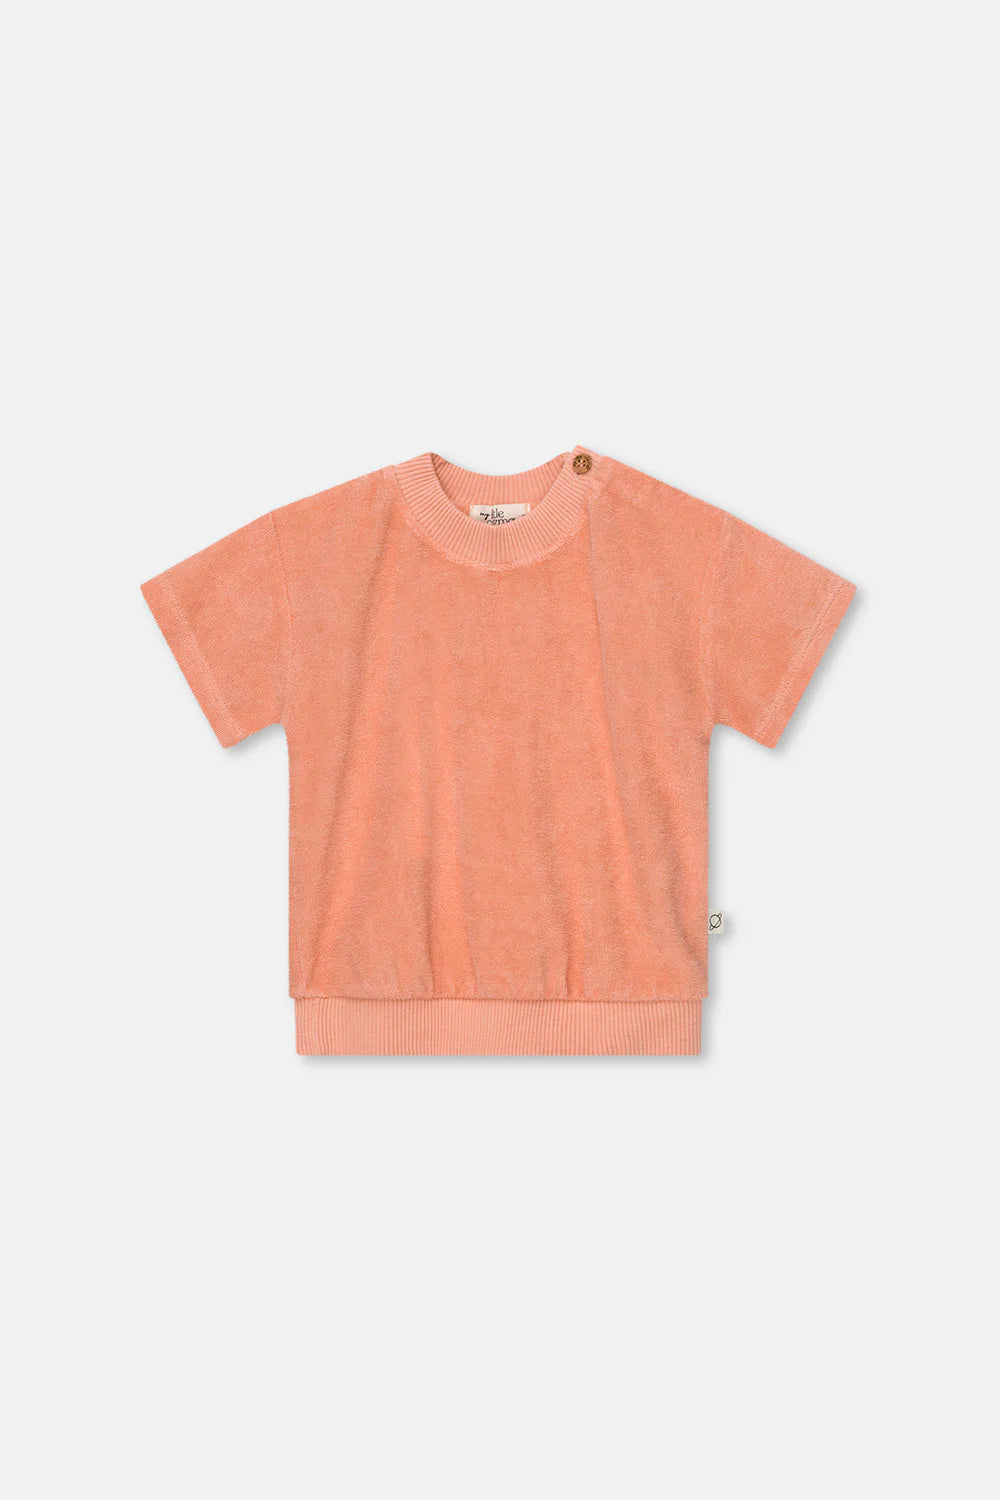 T-Shirt Toweling Baby Girl Laurel Peach - ملابس